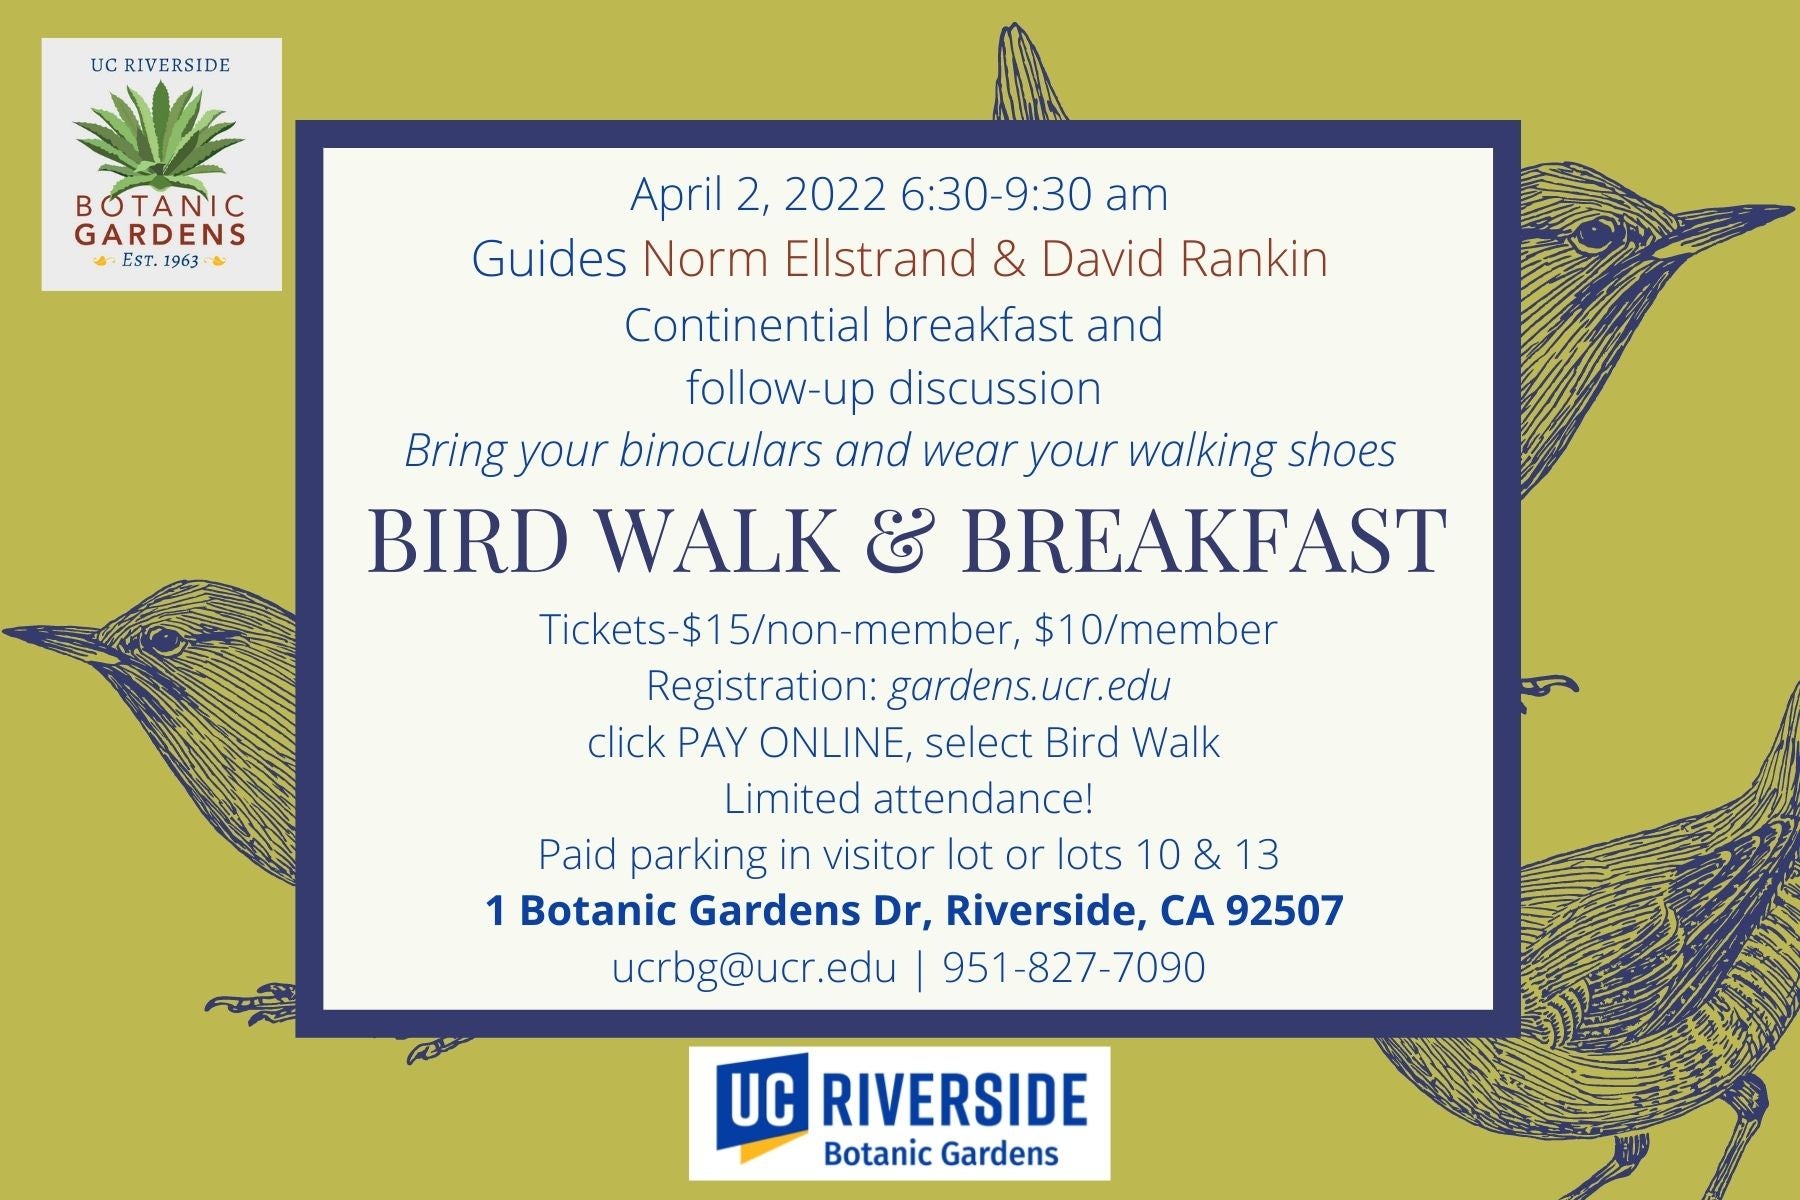 Bird Walk & Breakfast